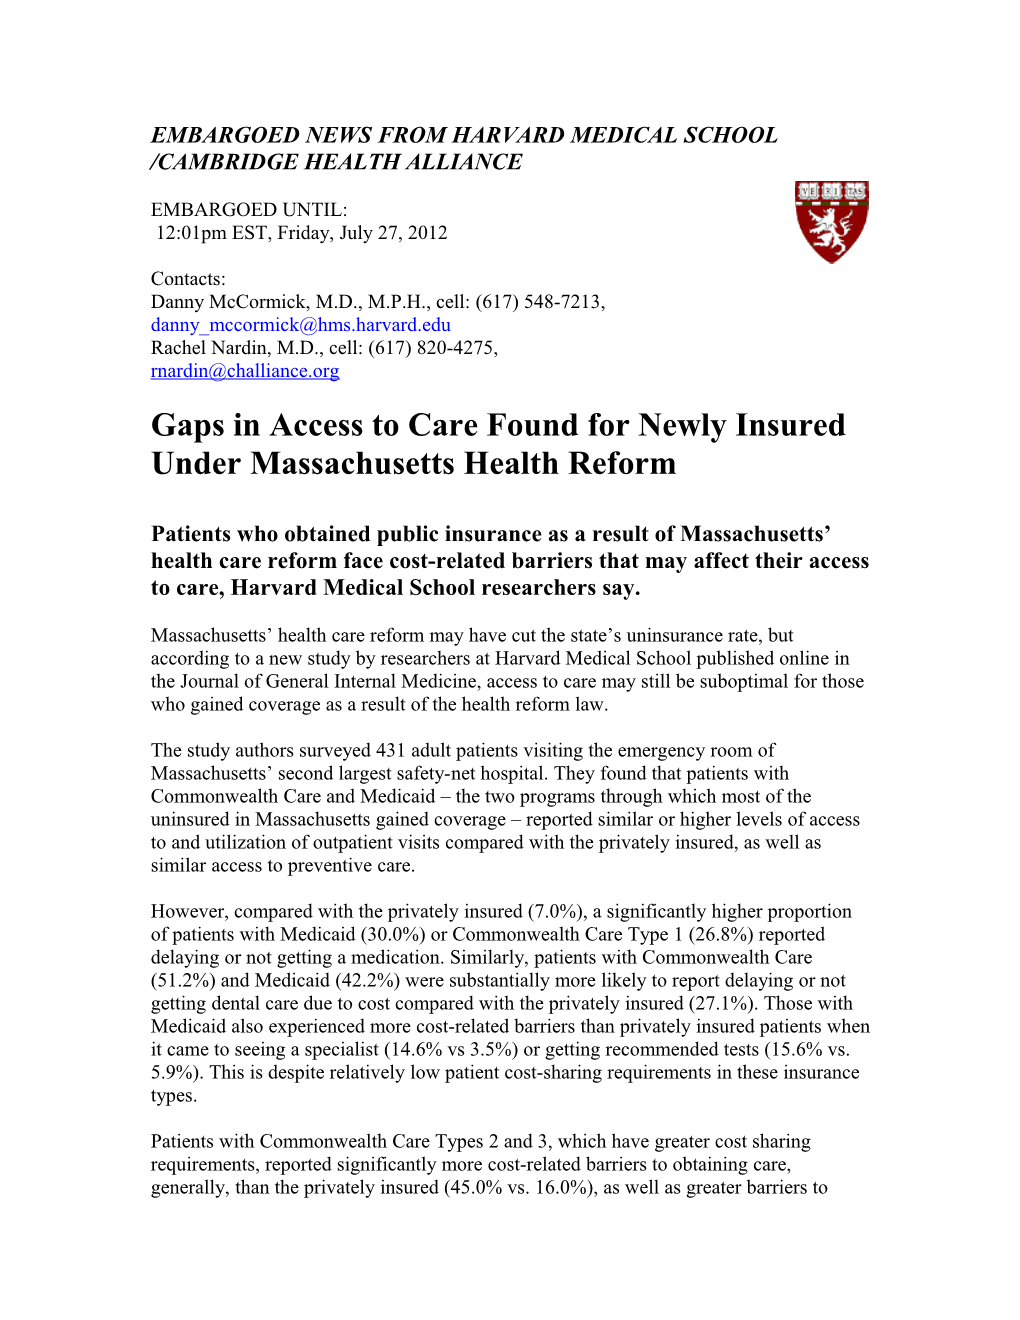 Embargoed News from Harvard Medical School /Cambridge Health Alliance